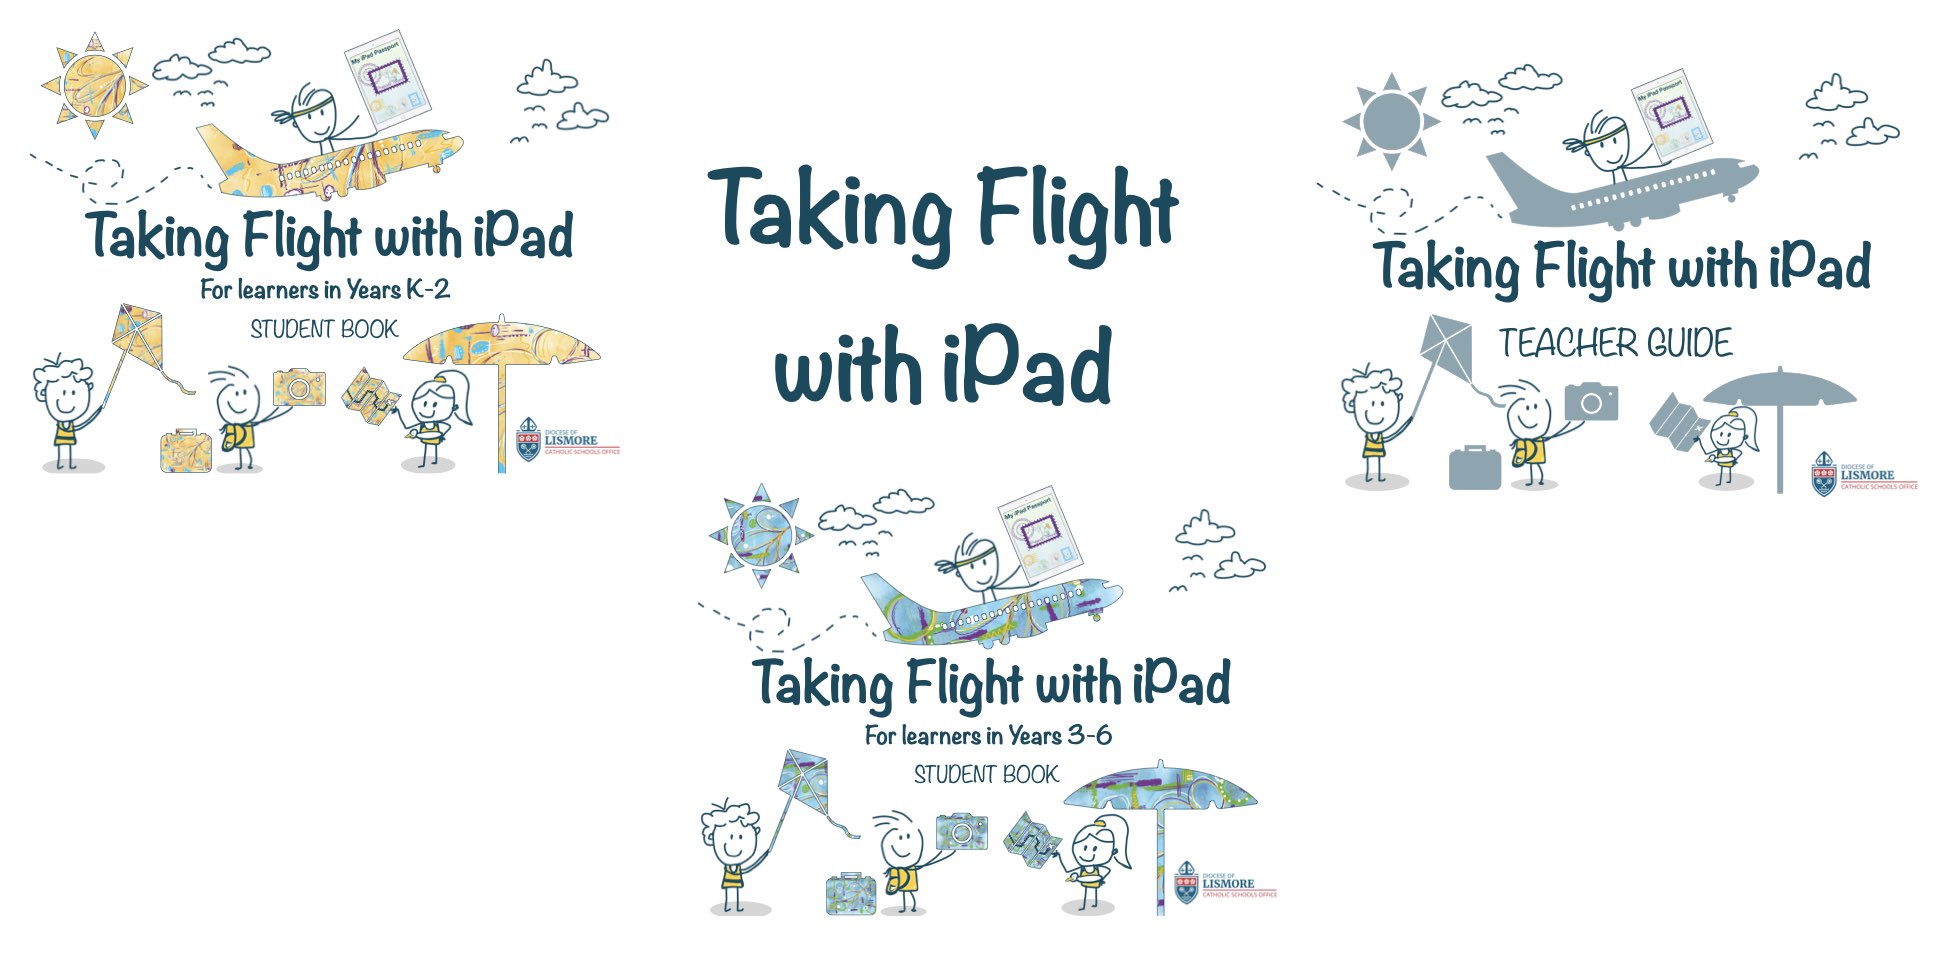 Taking Flight with iPad books